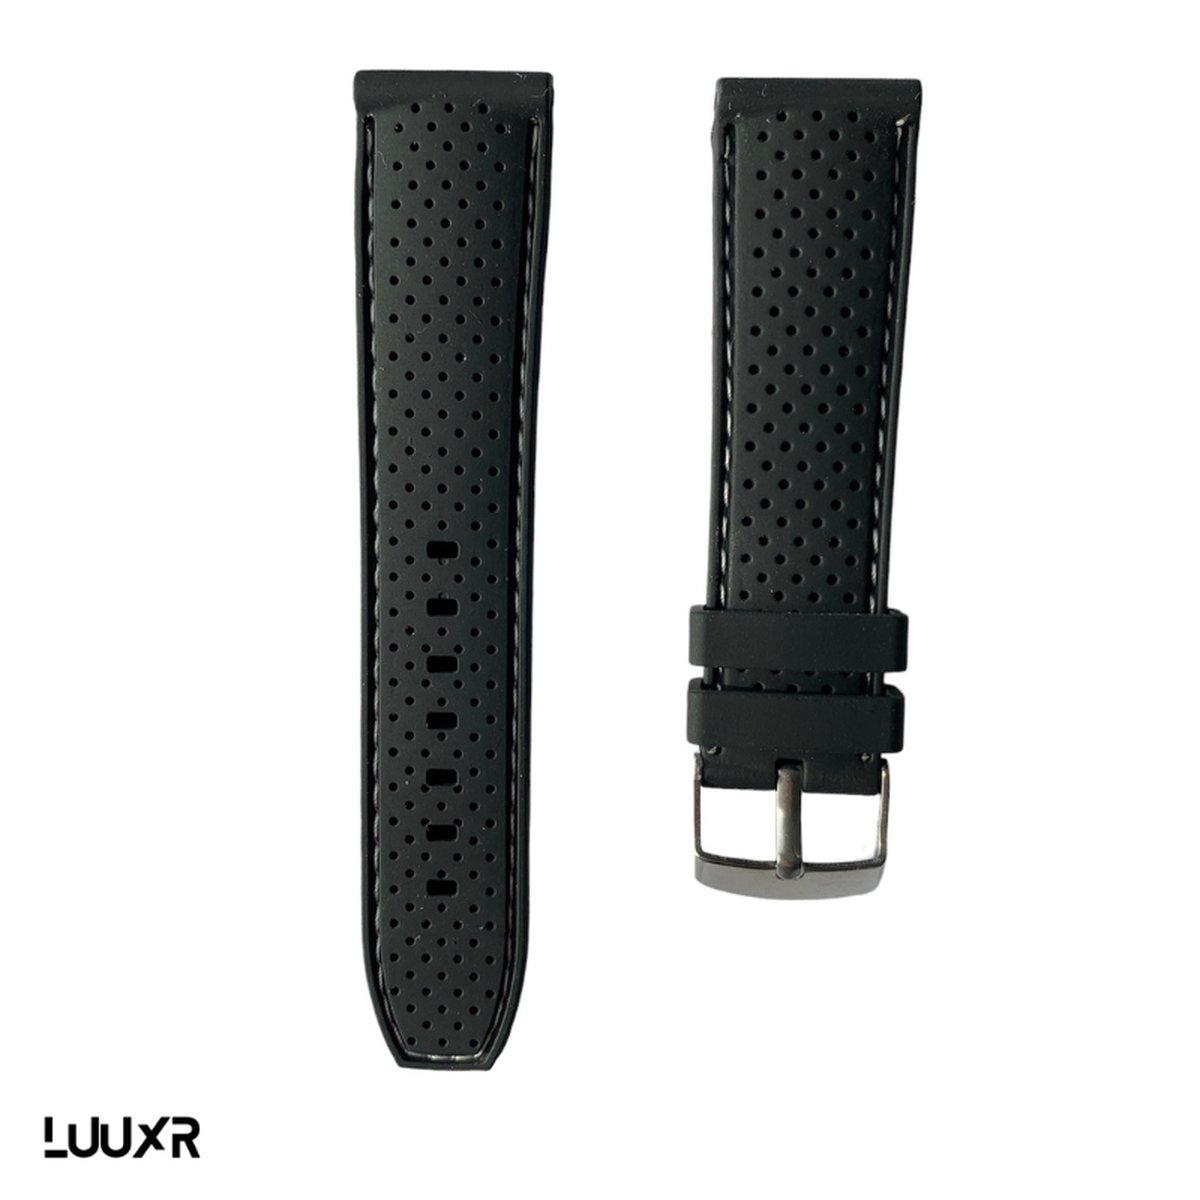 Luuxr strap black rubber white stitch 22mm luruwh220001